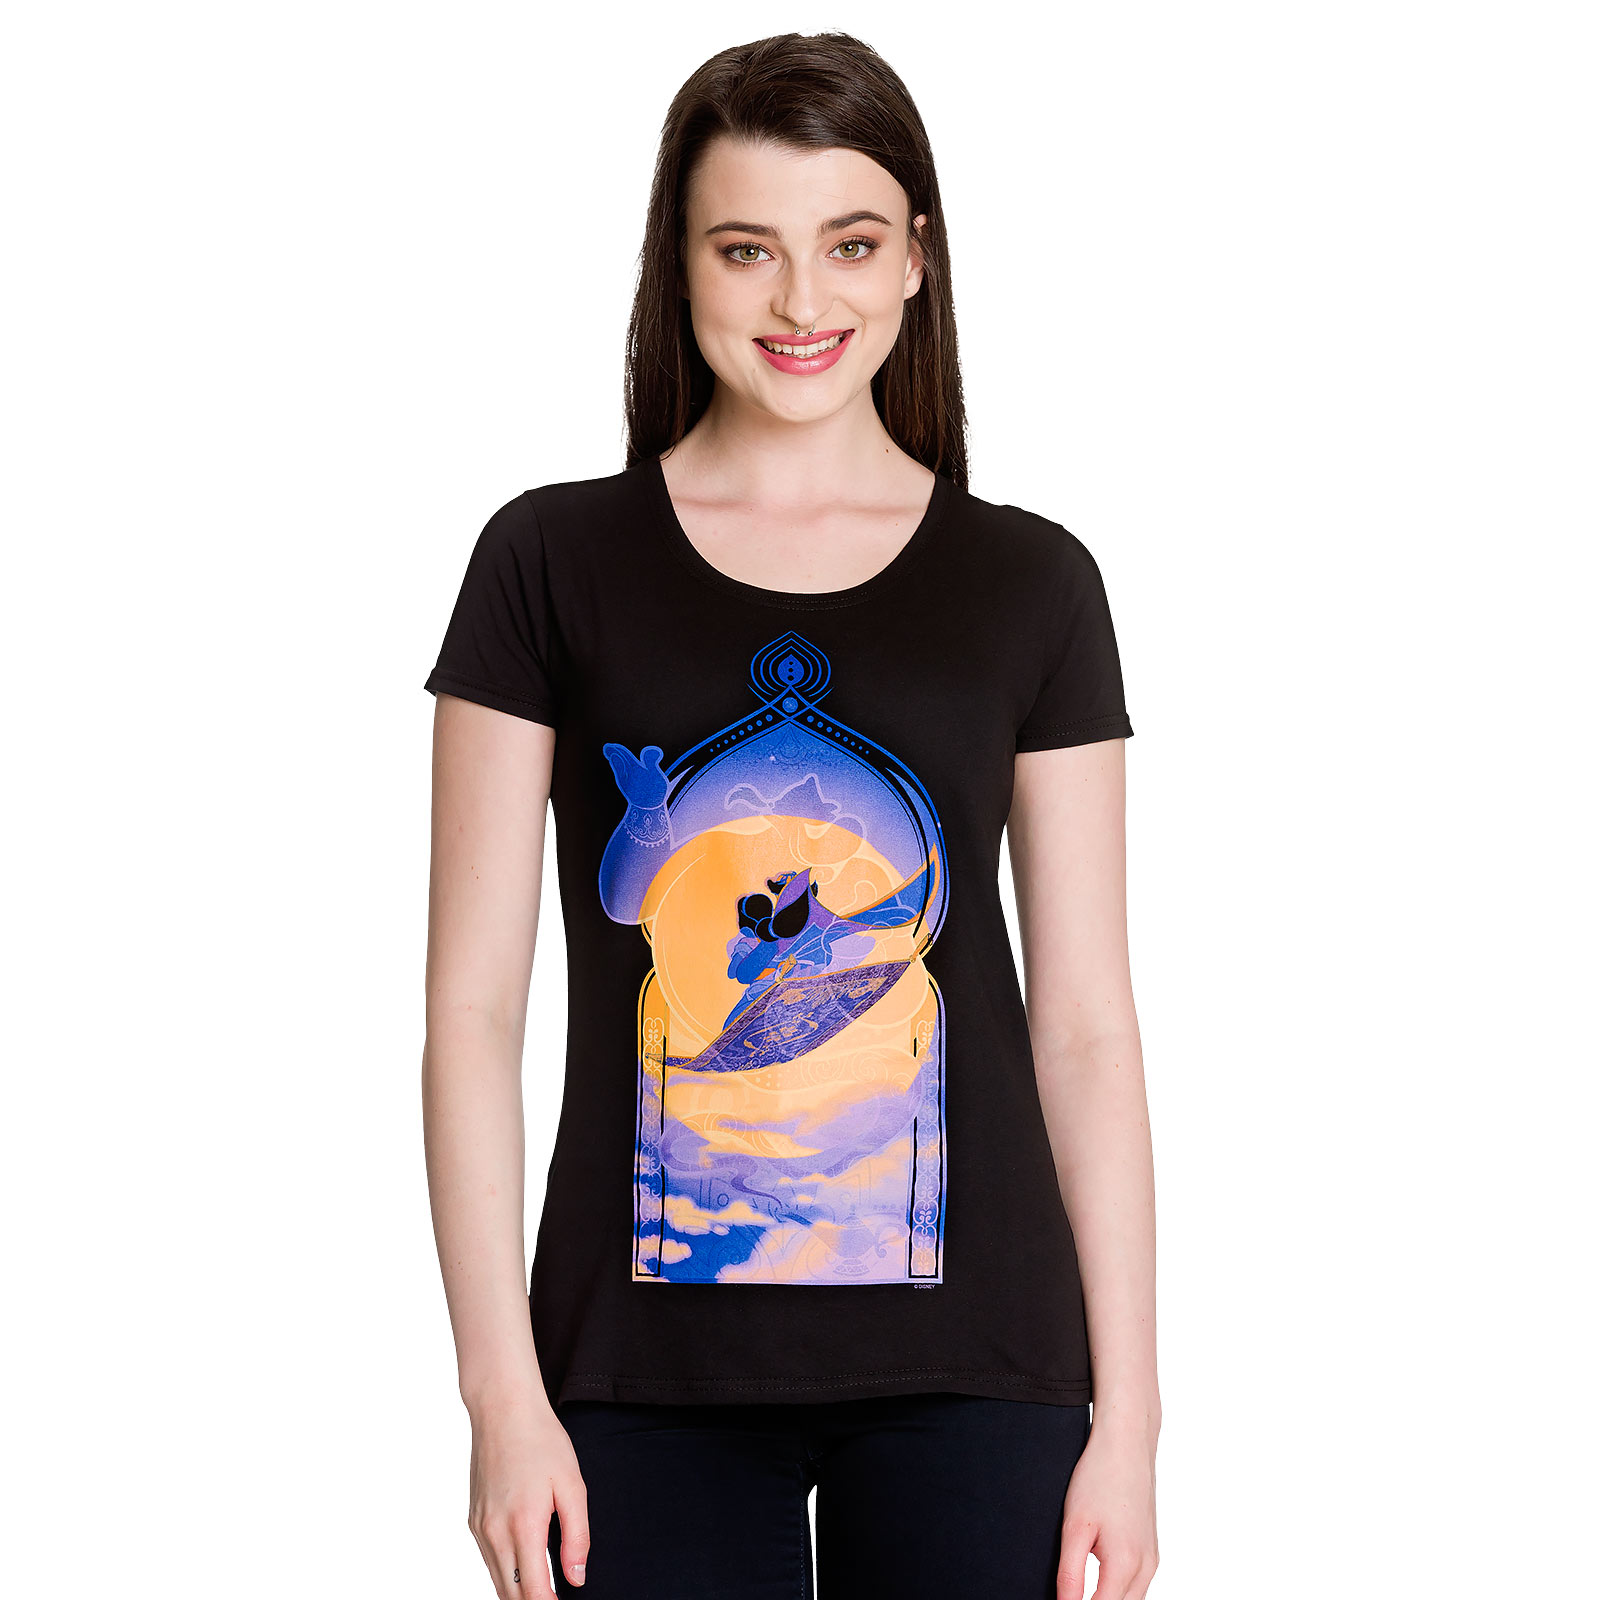 Aladdin - Carpet Ride Women's T-Shirt